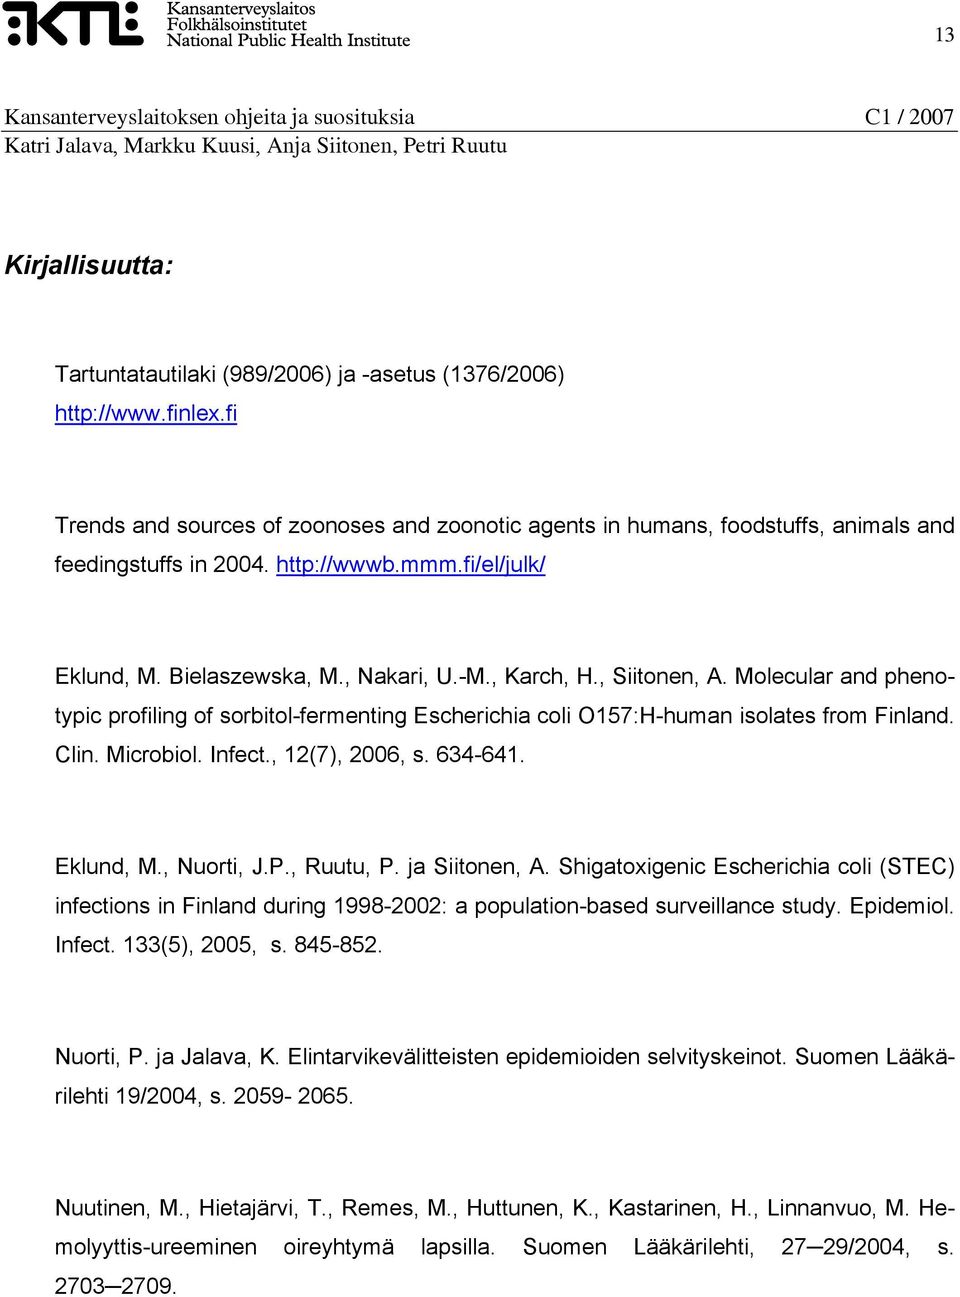 Molecular and phenotypic profiling of sorbitol-fermenting Escherichia coli O157:H-human isolates from Finland. Clin. Microbiol. Infect., 12(7), 2006, s. 634-641. Eklund, M., Nuorti, J.P., Ruutu, P.